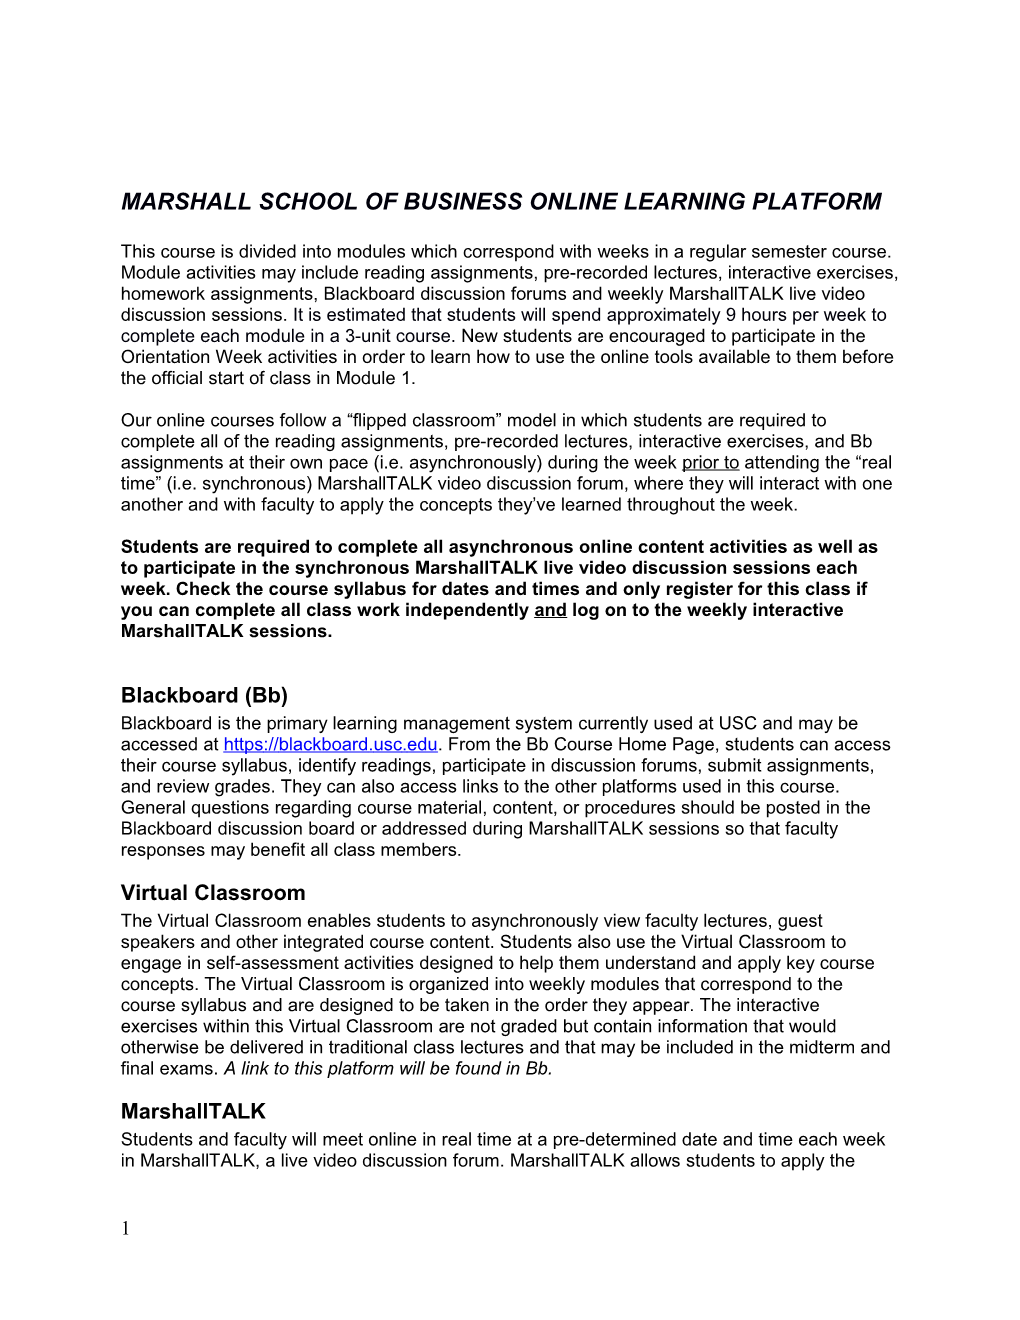 Marshall School of Business Online Learning Platform